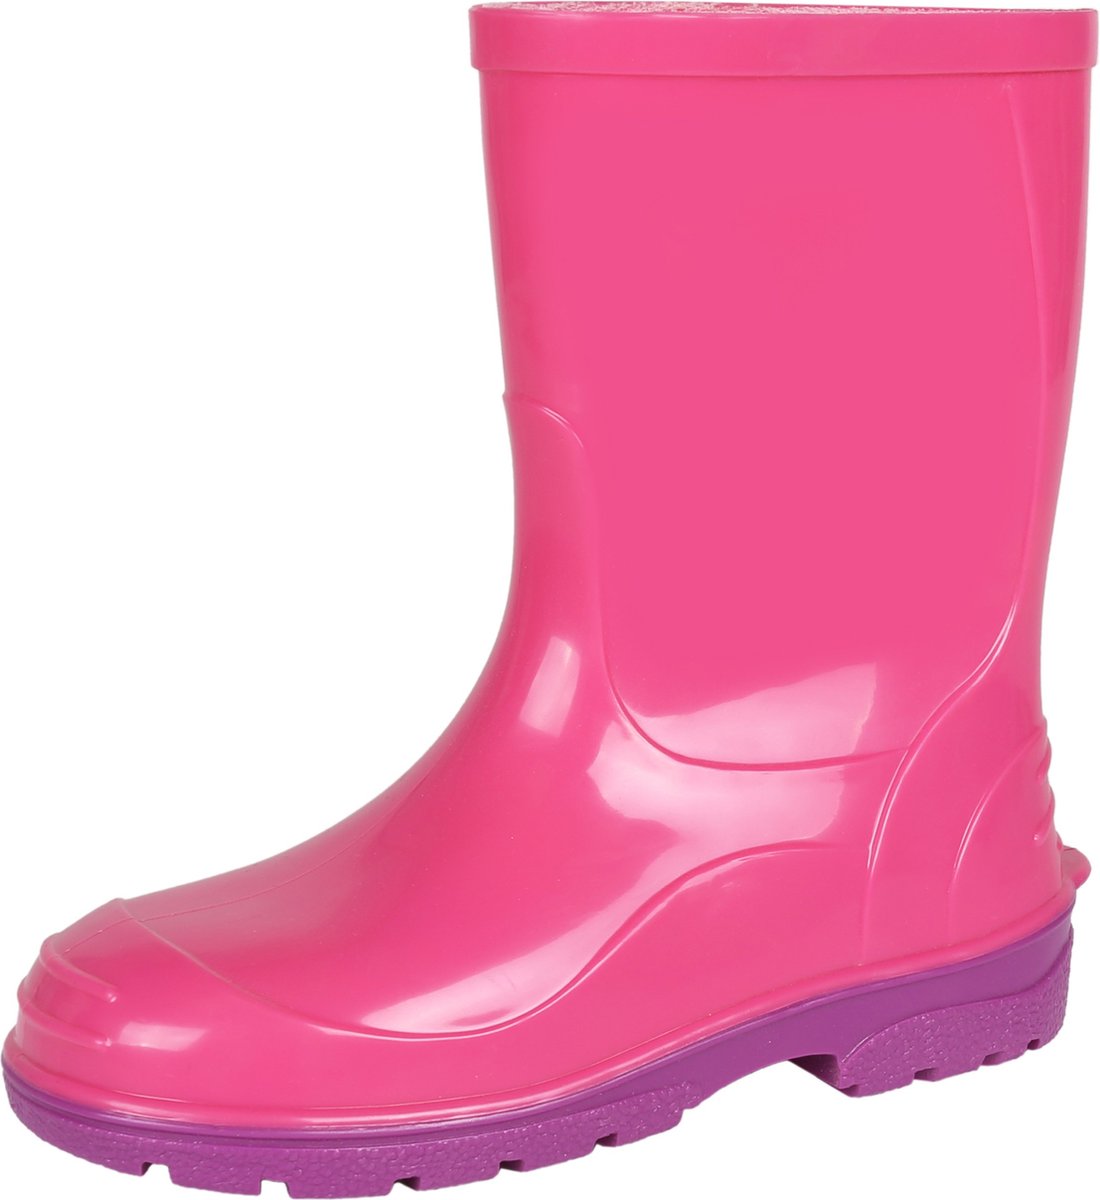 Roze laarzen met paarse zool - Ola LEMIGO / 31